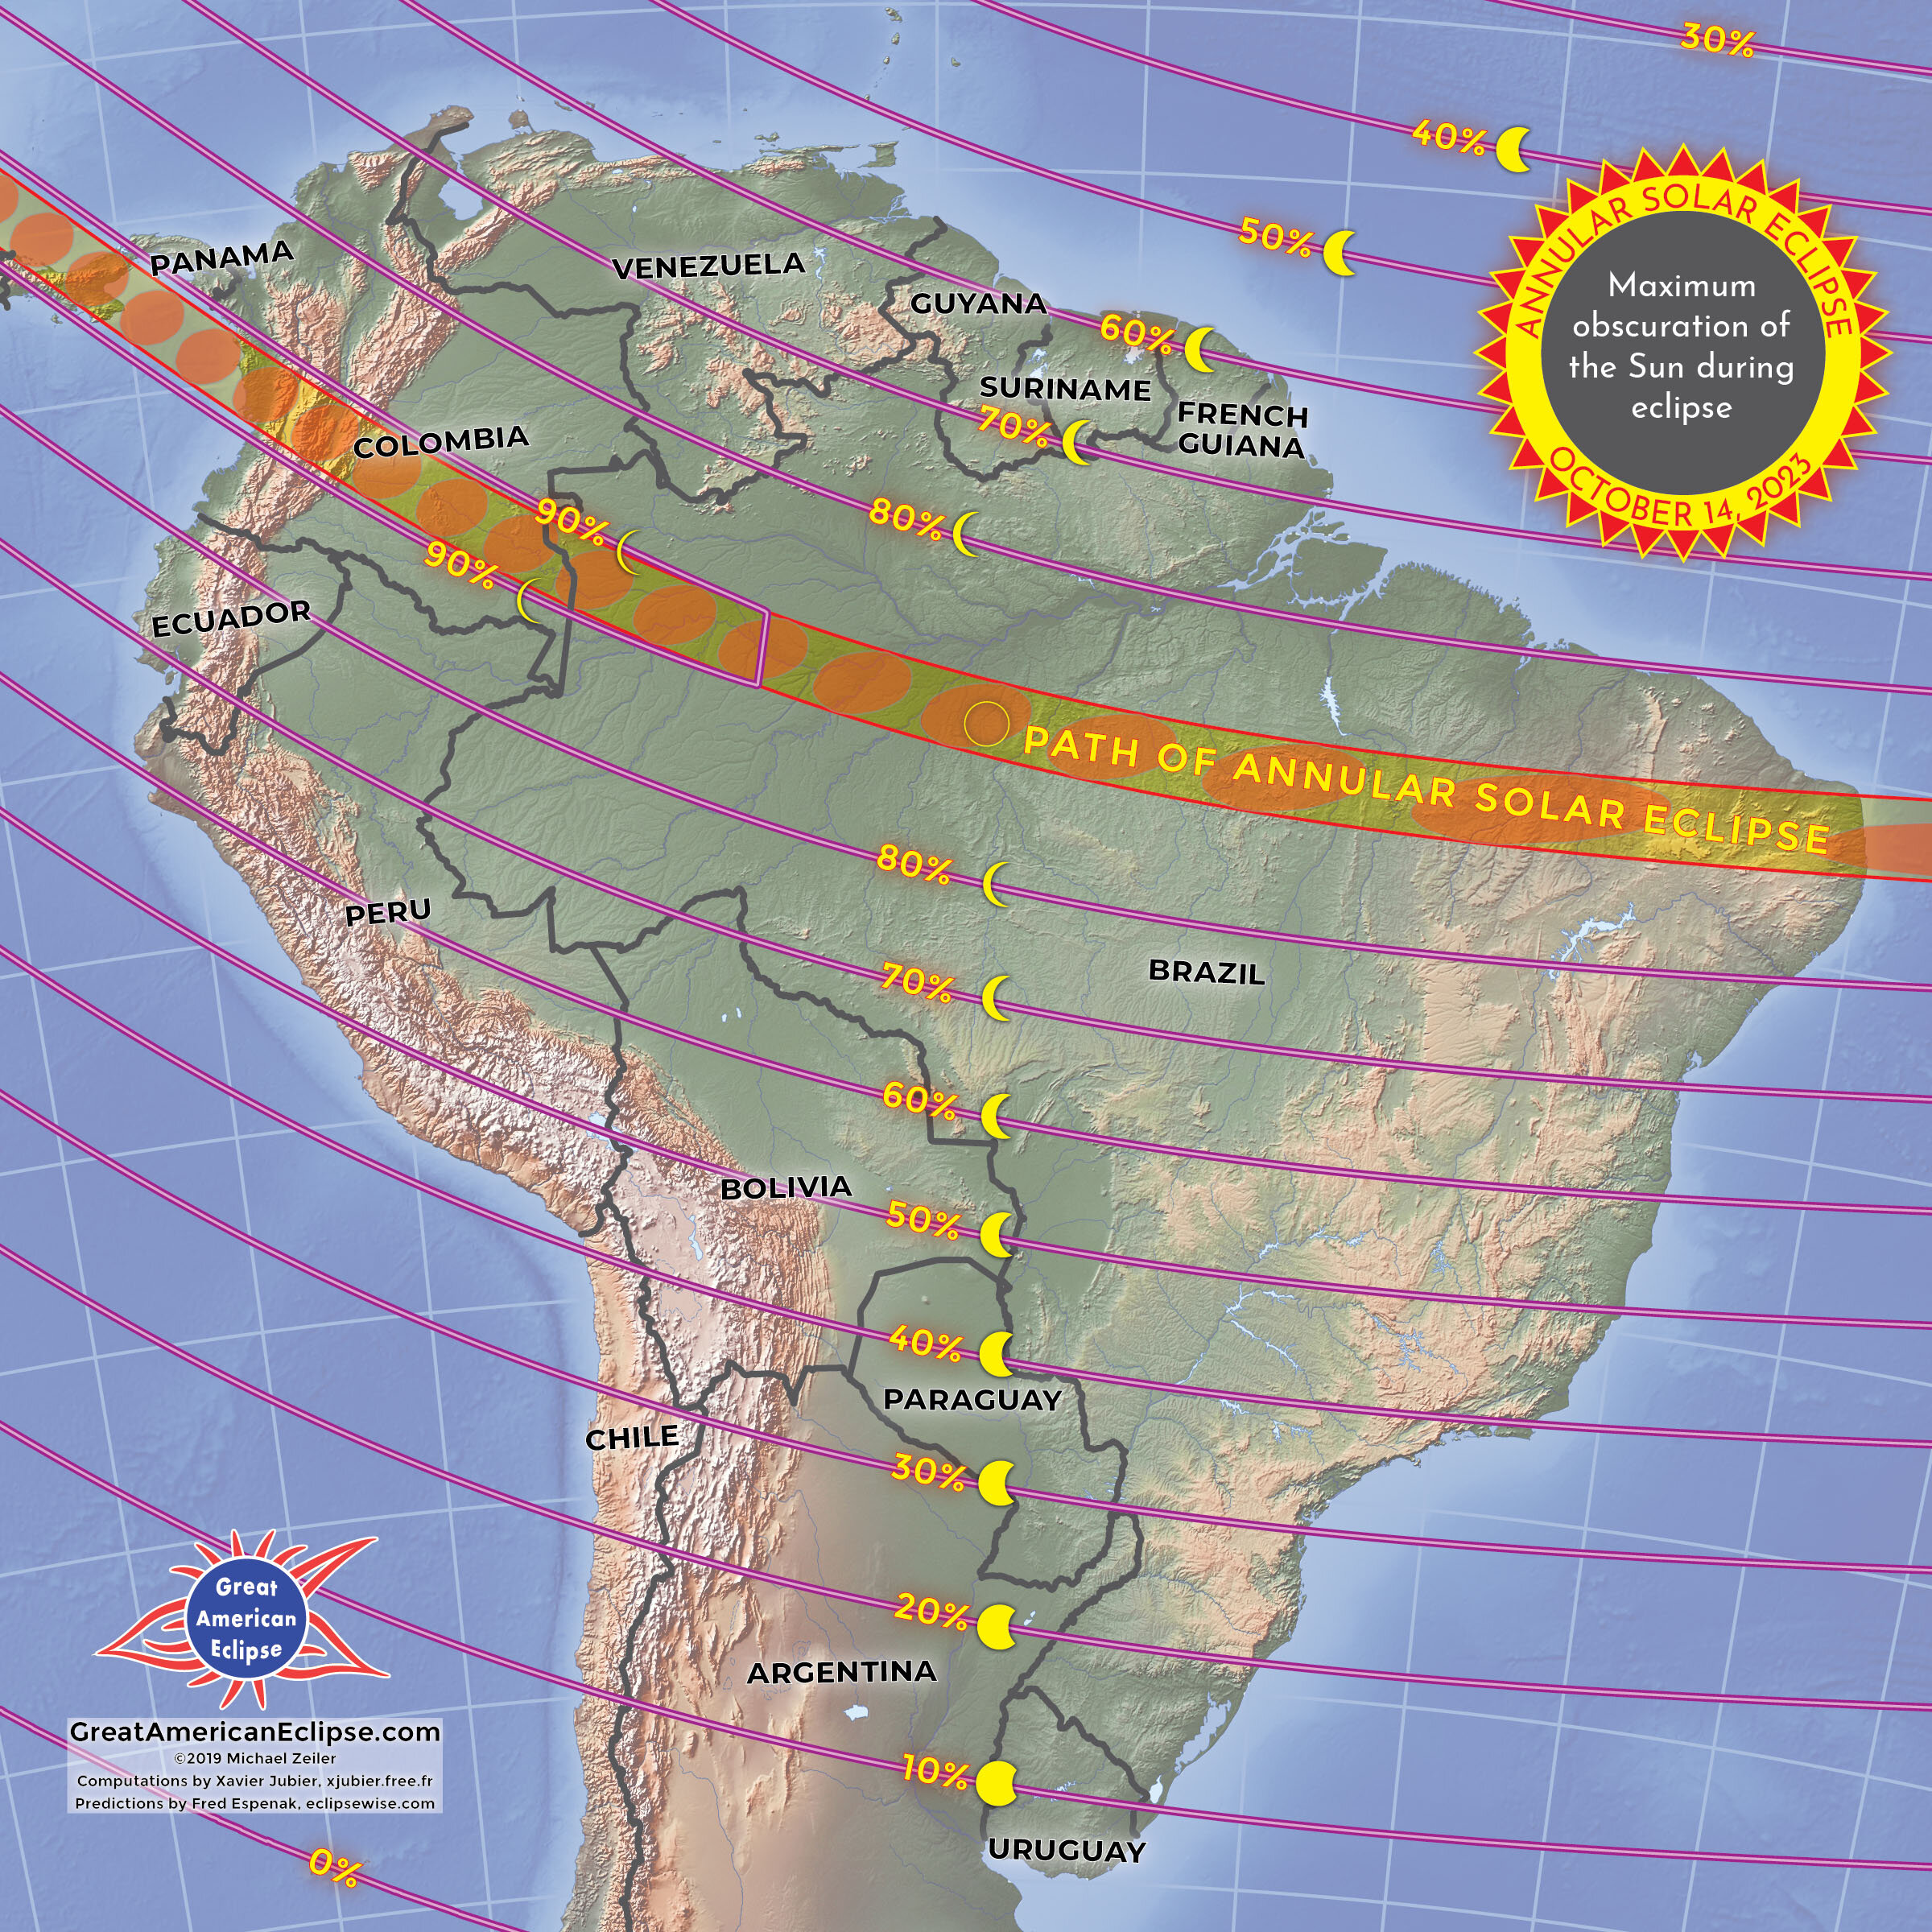 CREDIT: GreatAmericanEclipse.com - The annular solar eclipse across South America